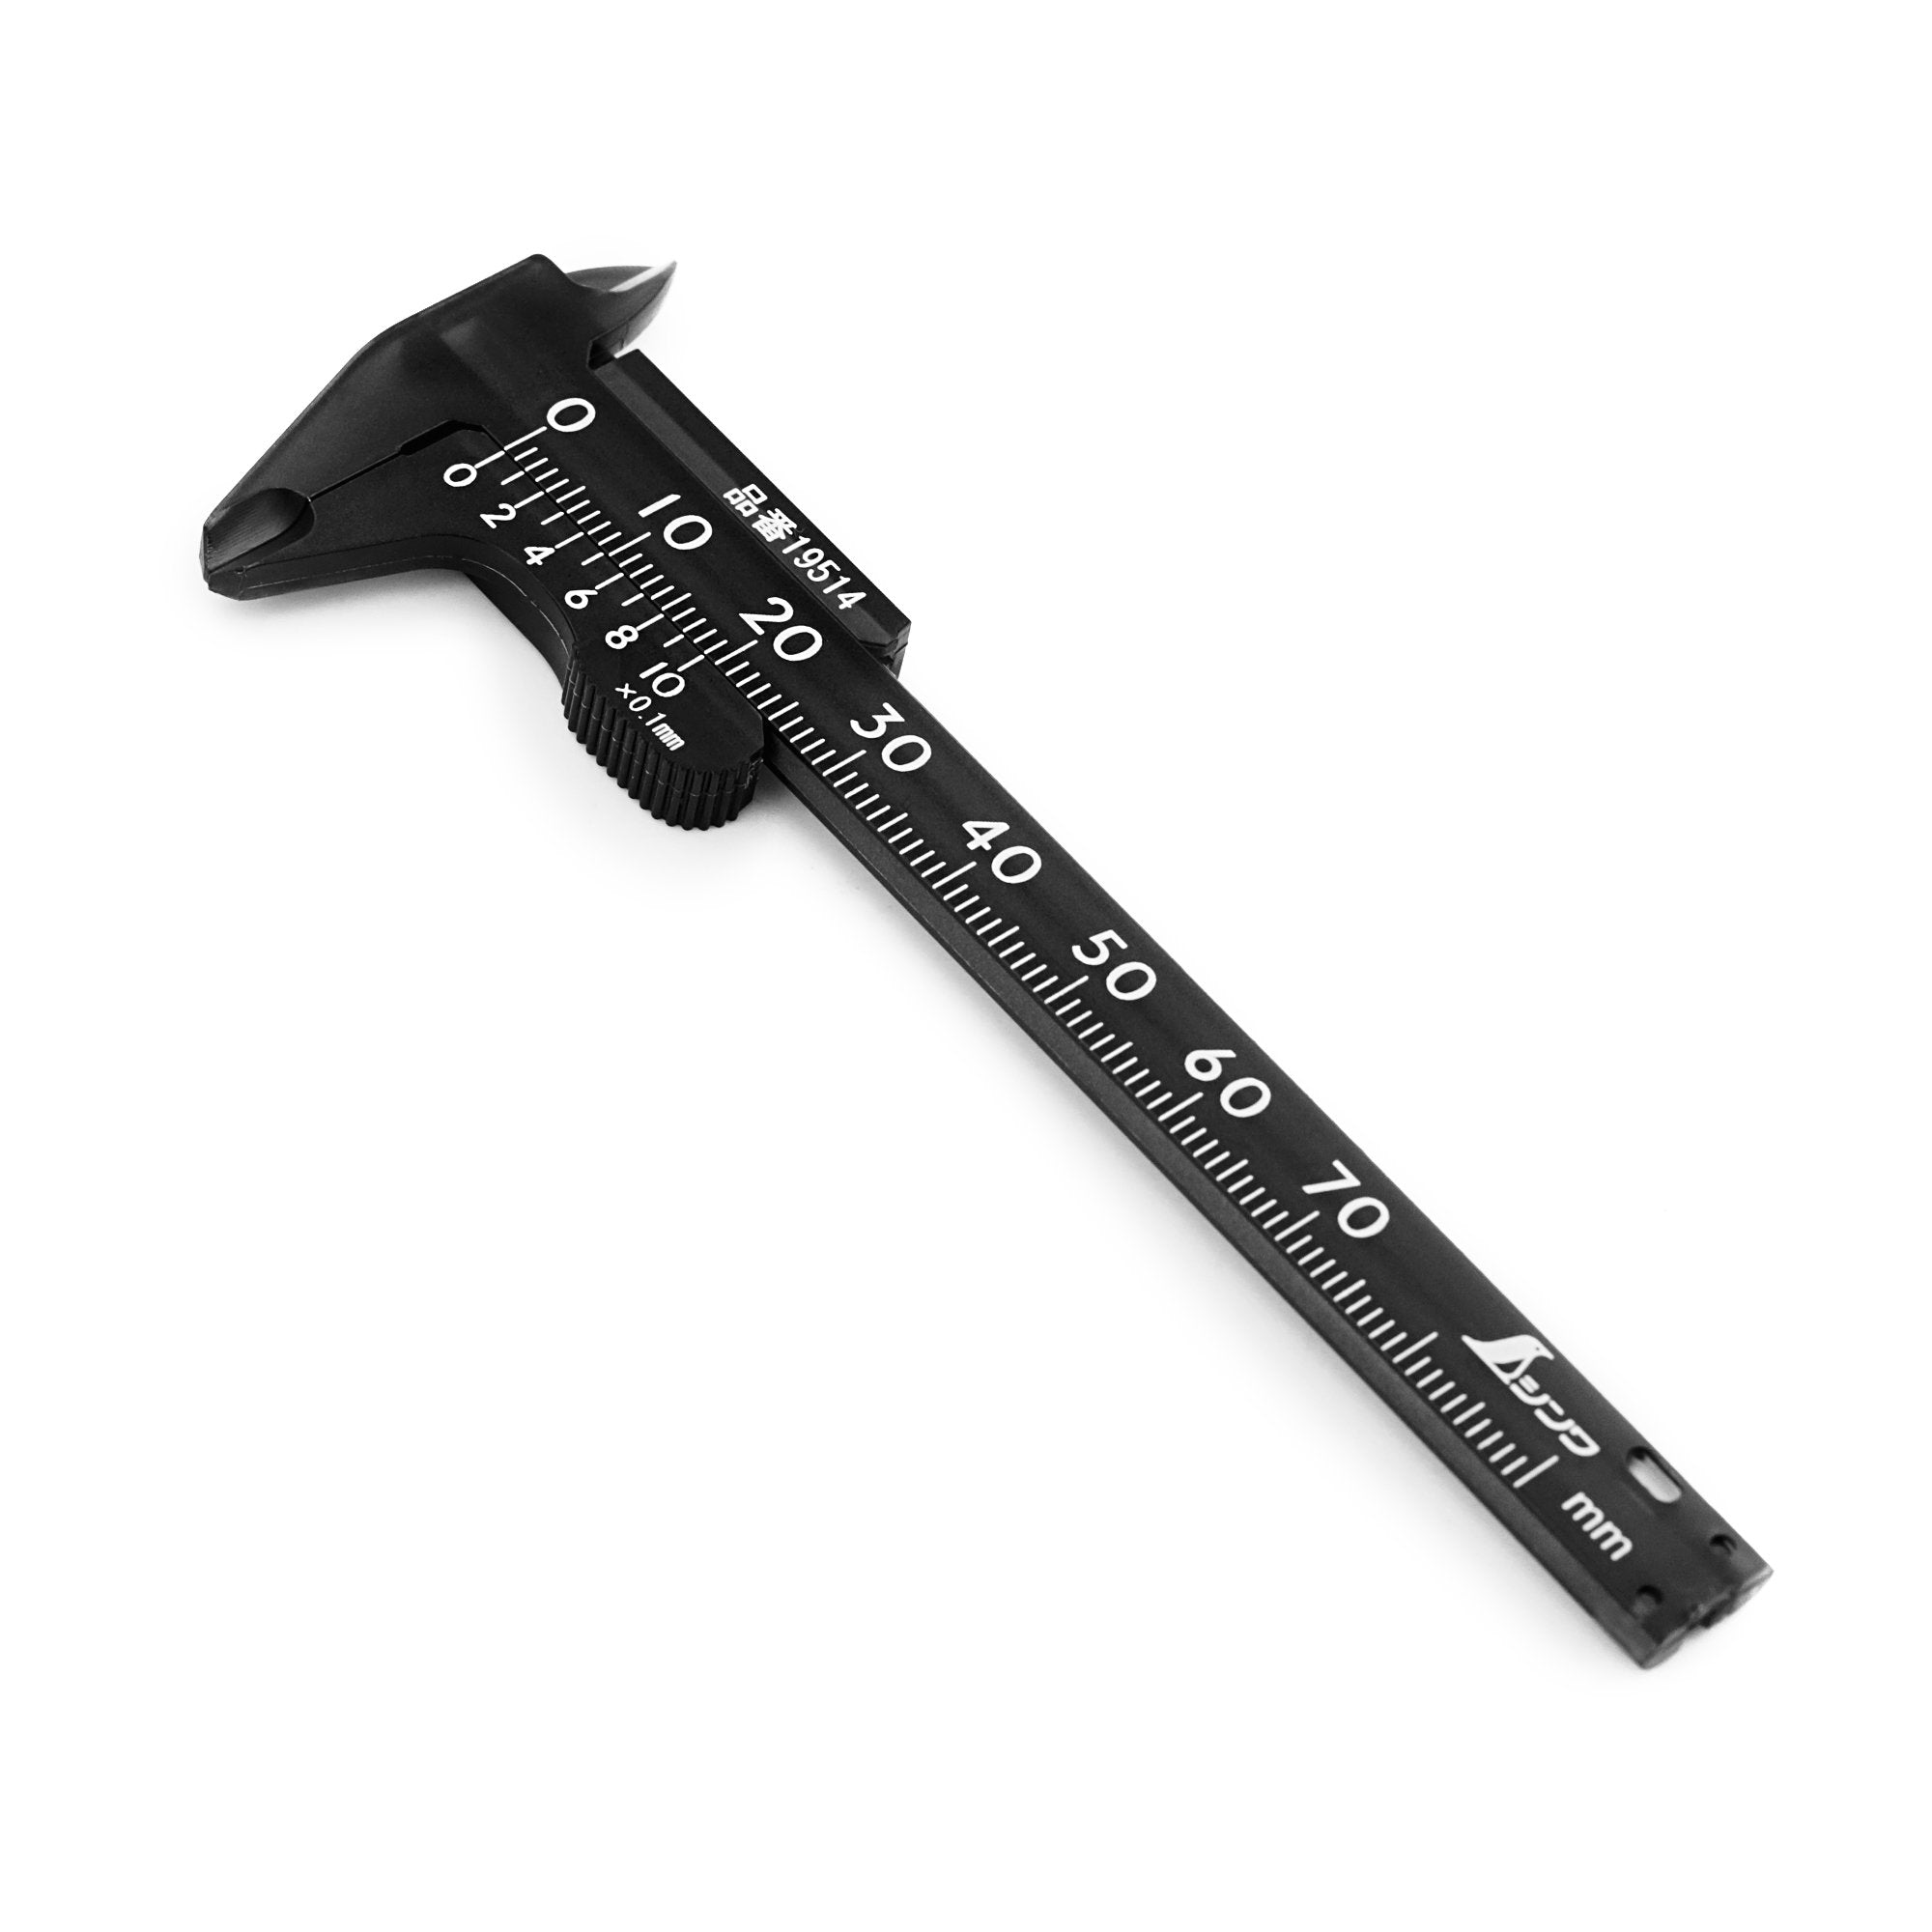 Mini Pocket Vernier Caliper, a Watch Measuring Tool Strapcode Watch Bands